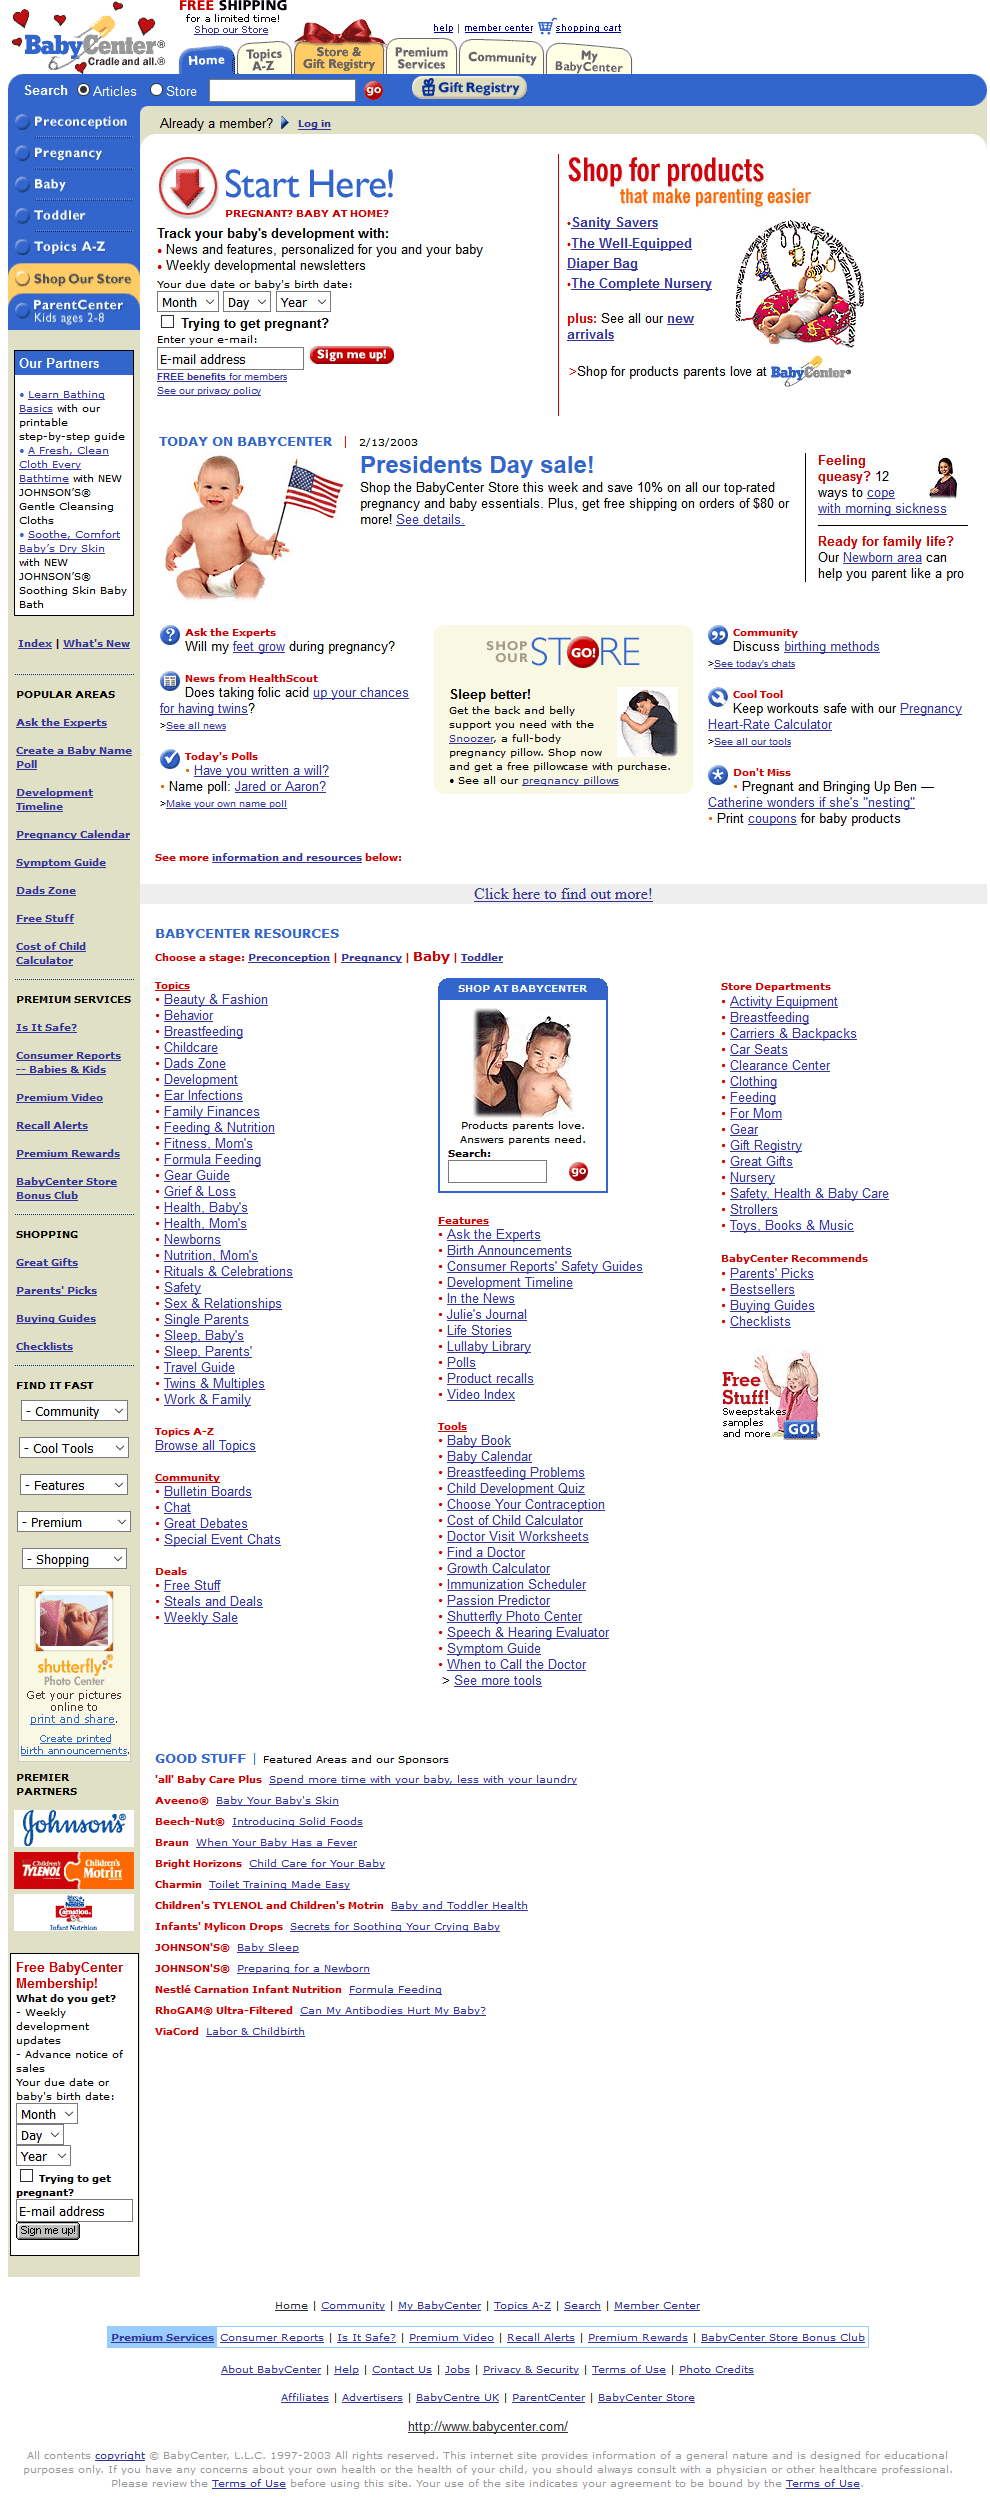 BabyCenter website in 2003